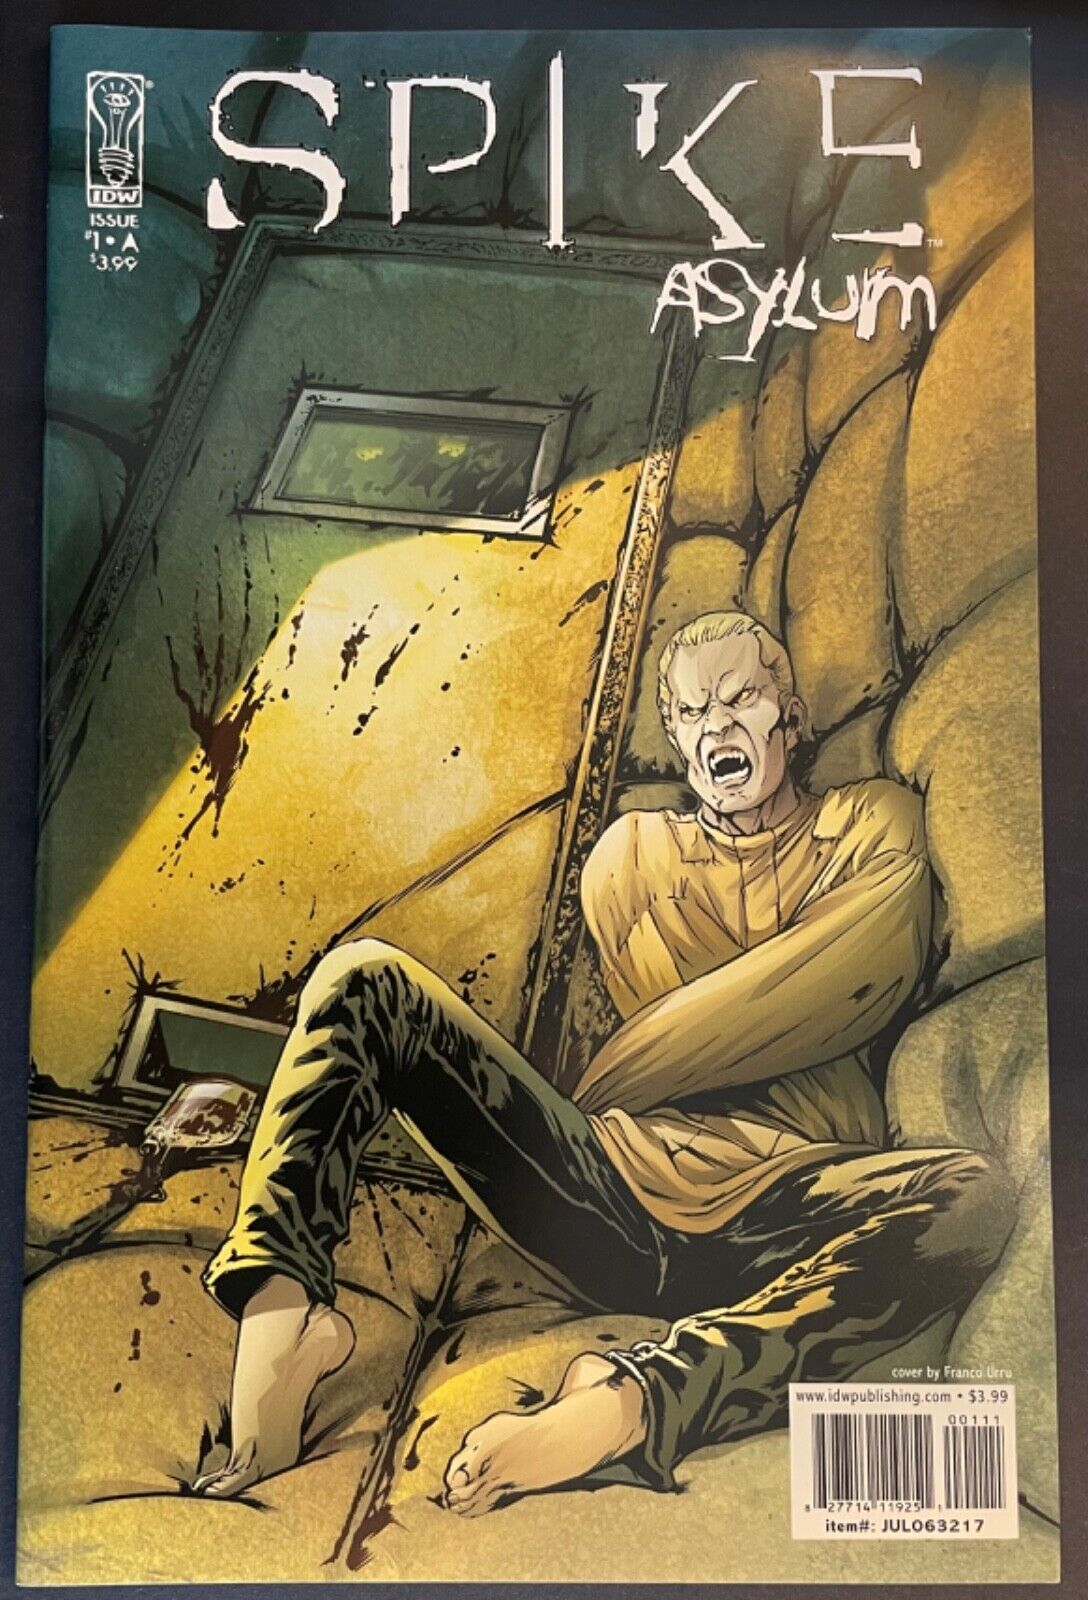 IDW Comics Spike Asylum #1.A